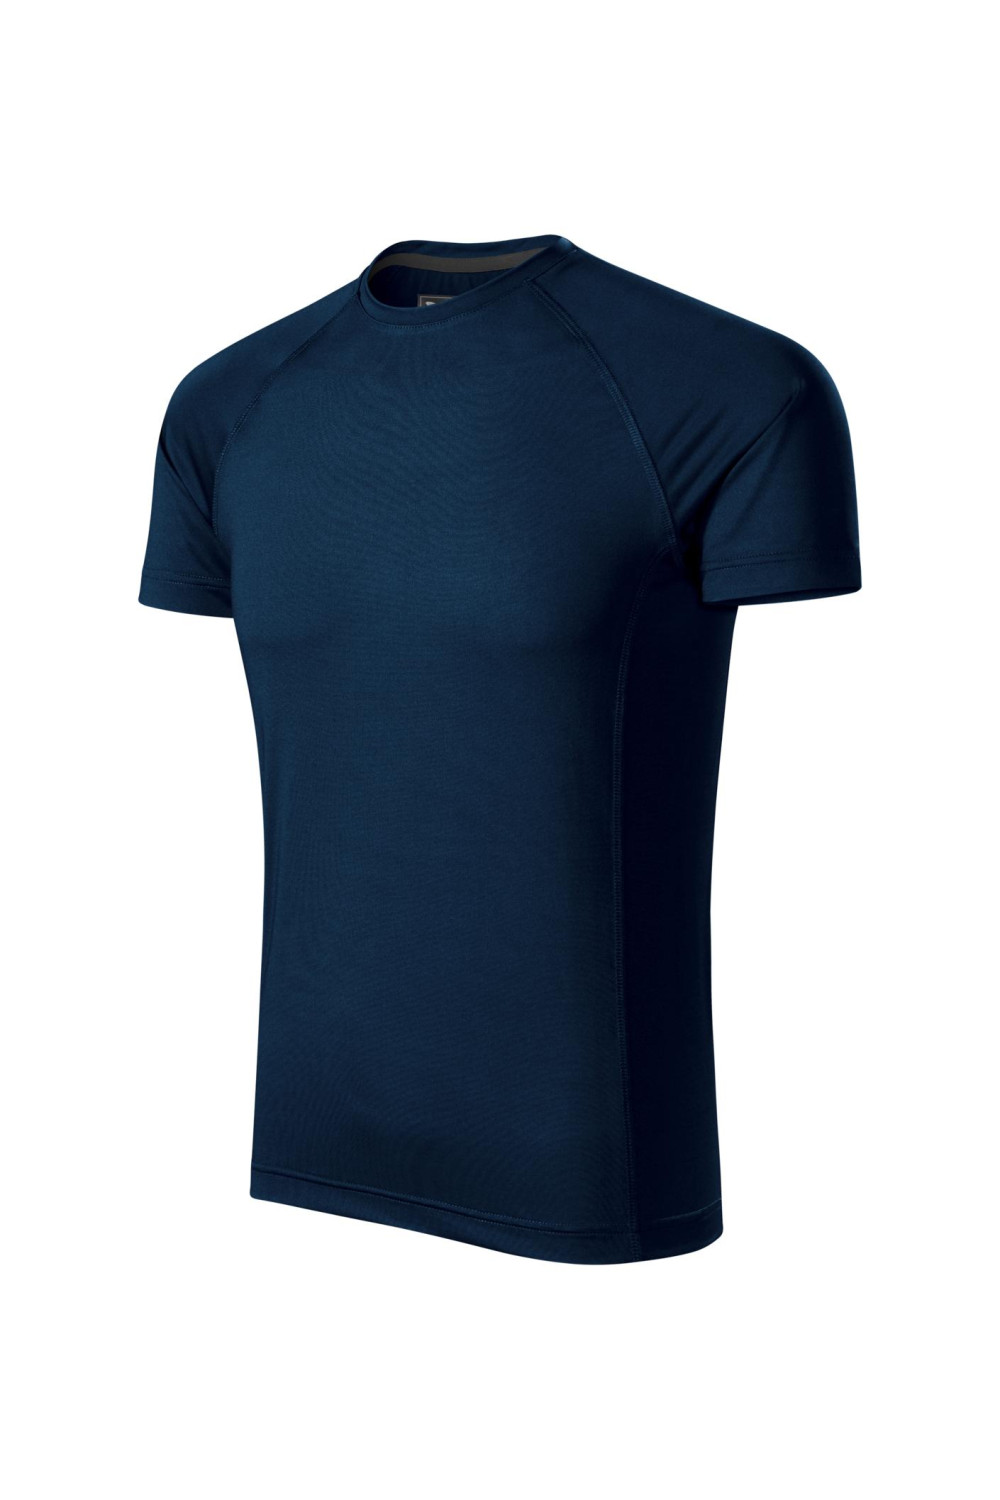 DESTINY 175 MALFINI ADLER Sportowa koszulka męska t-shirt granatowy